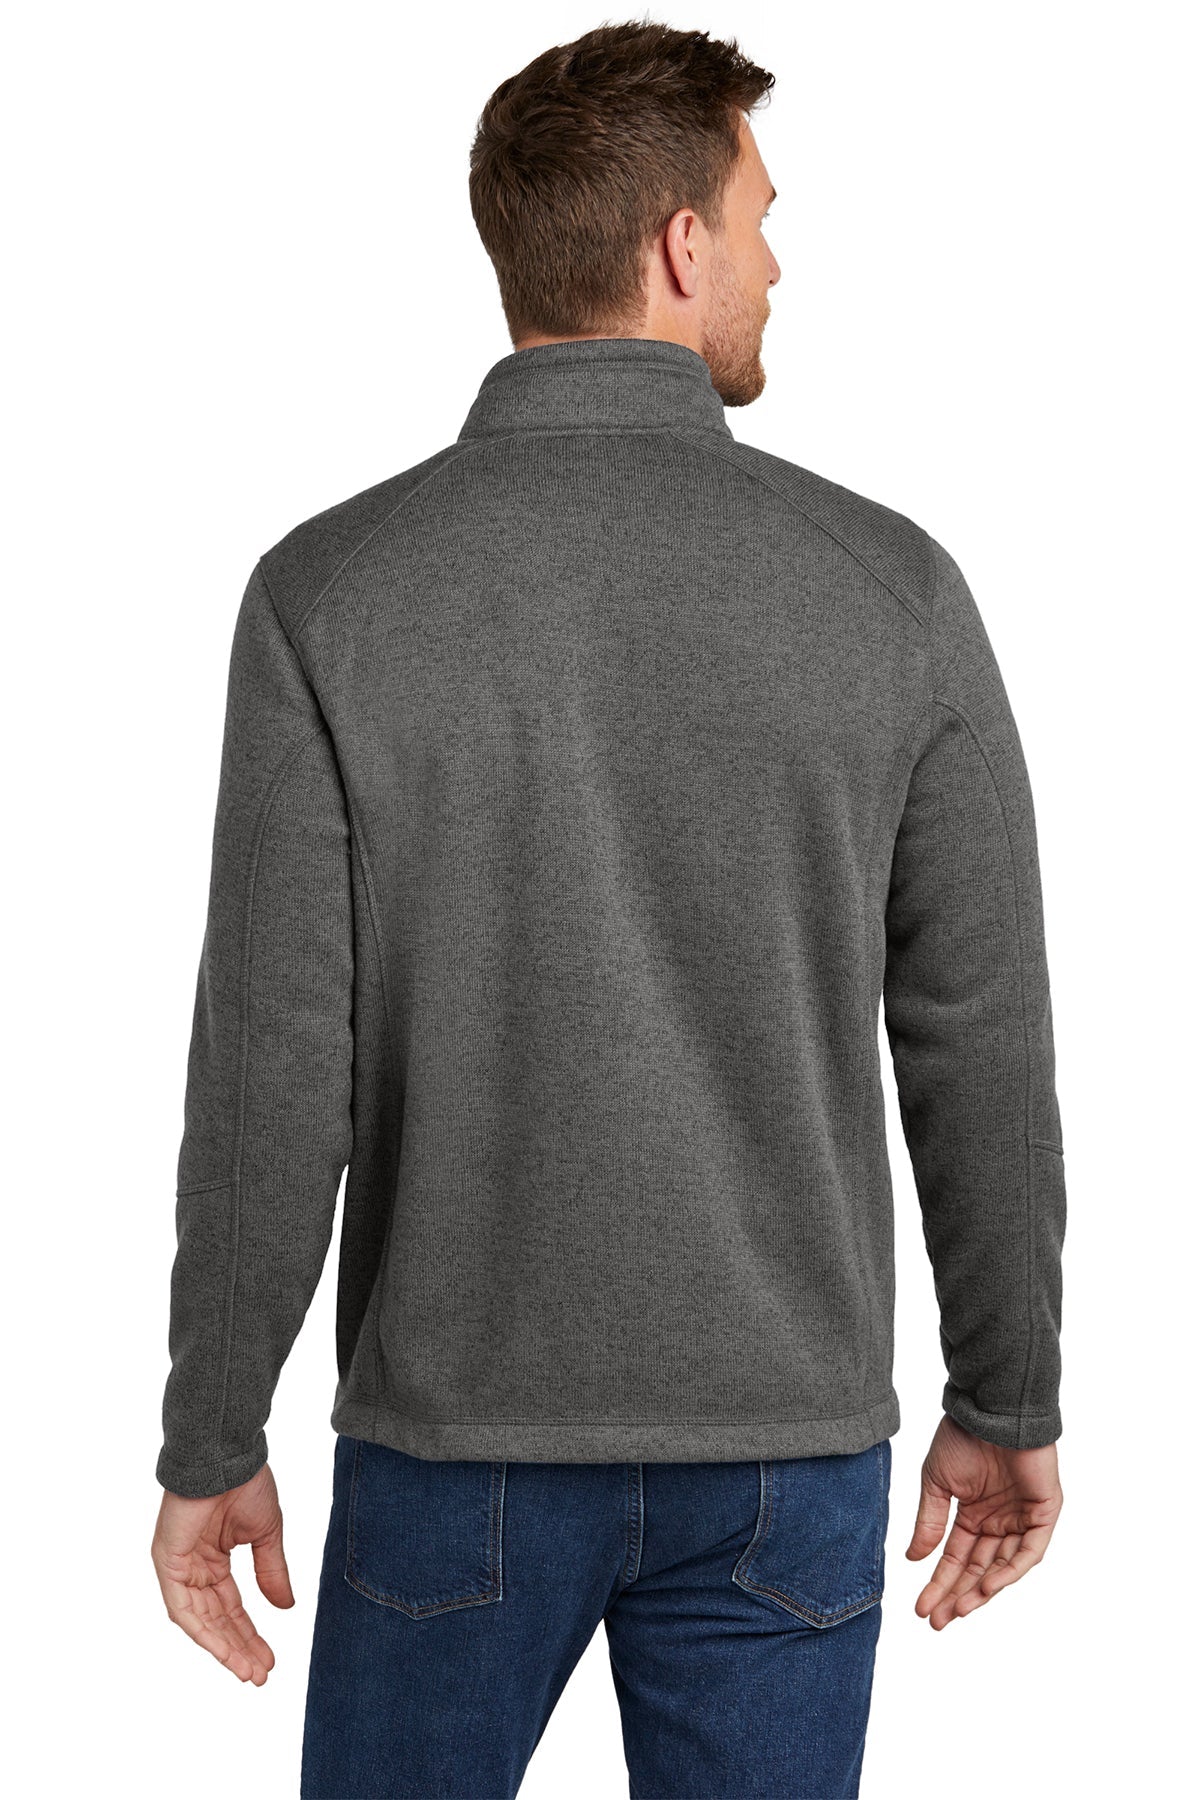 Port Authority Arc Sweater Fleece Custom Jackets, Grey Smoke Heather